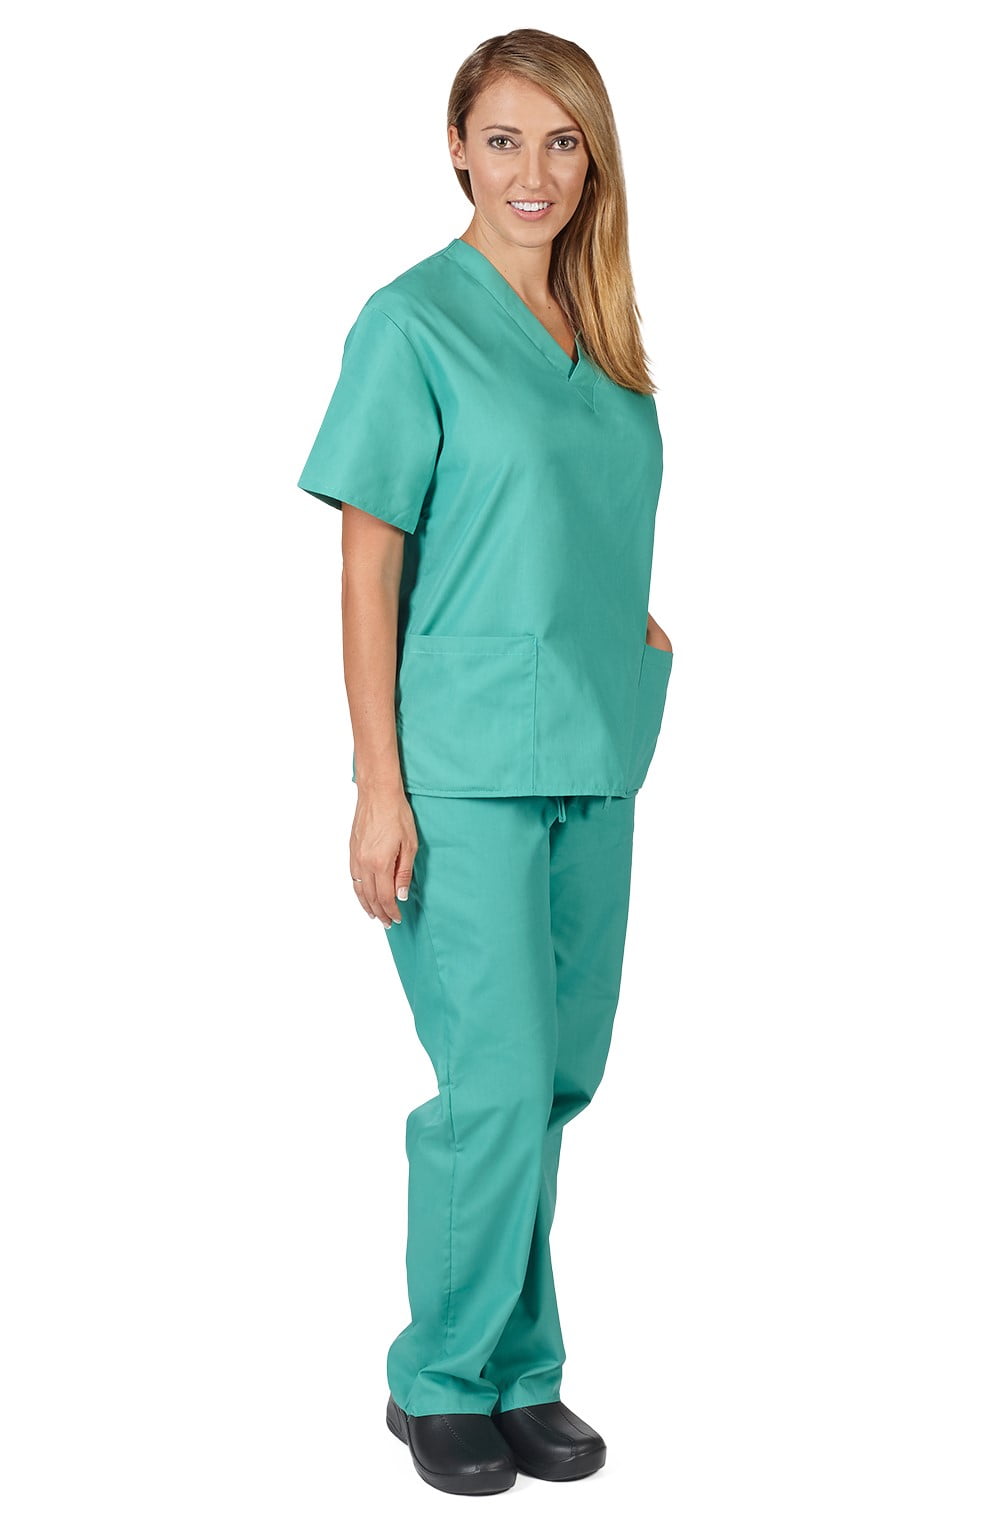 M&M SCRUBS Unisex Solid Scrub Set, Women Medical Uniforms 102 - Walmart.com